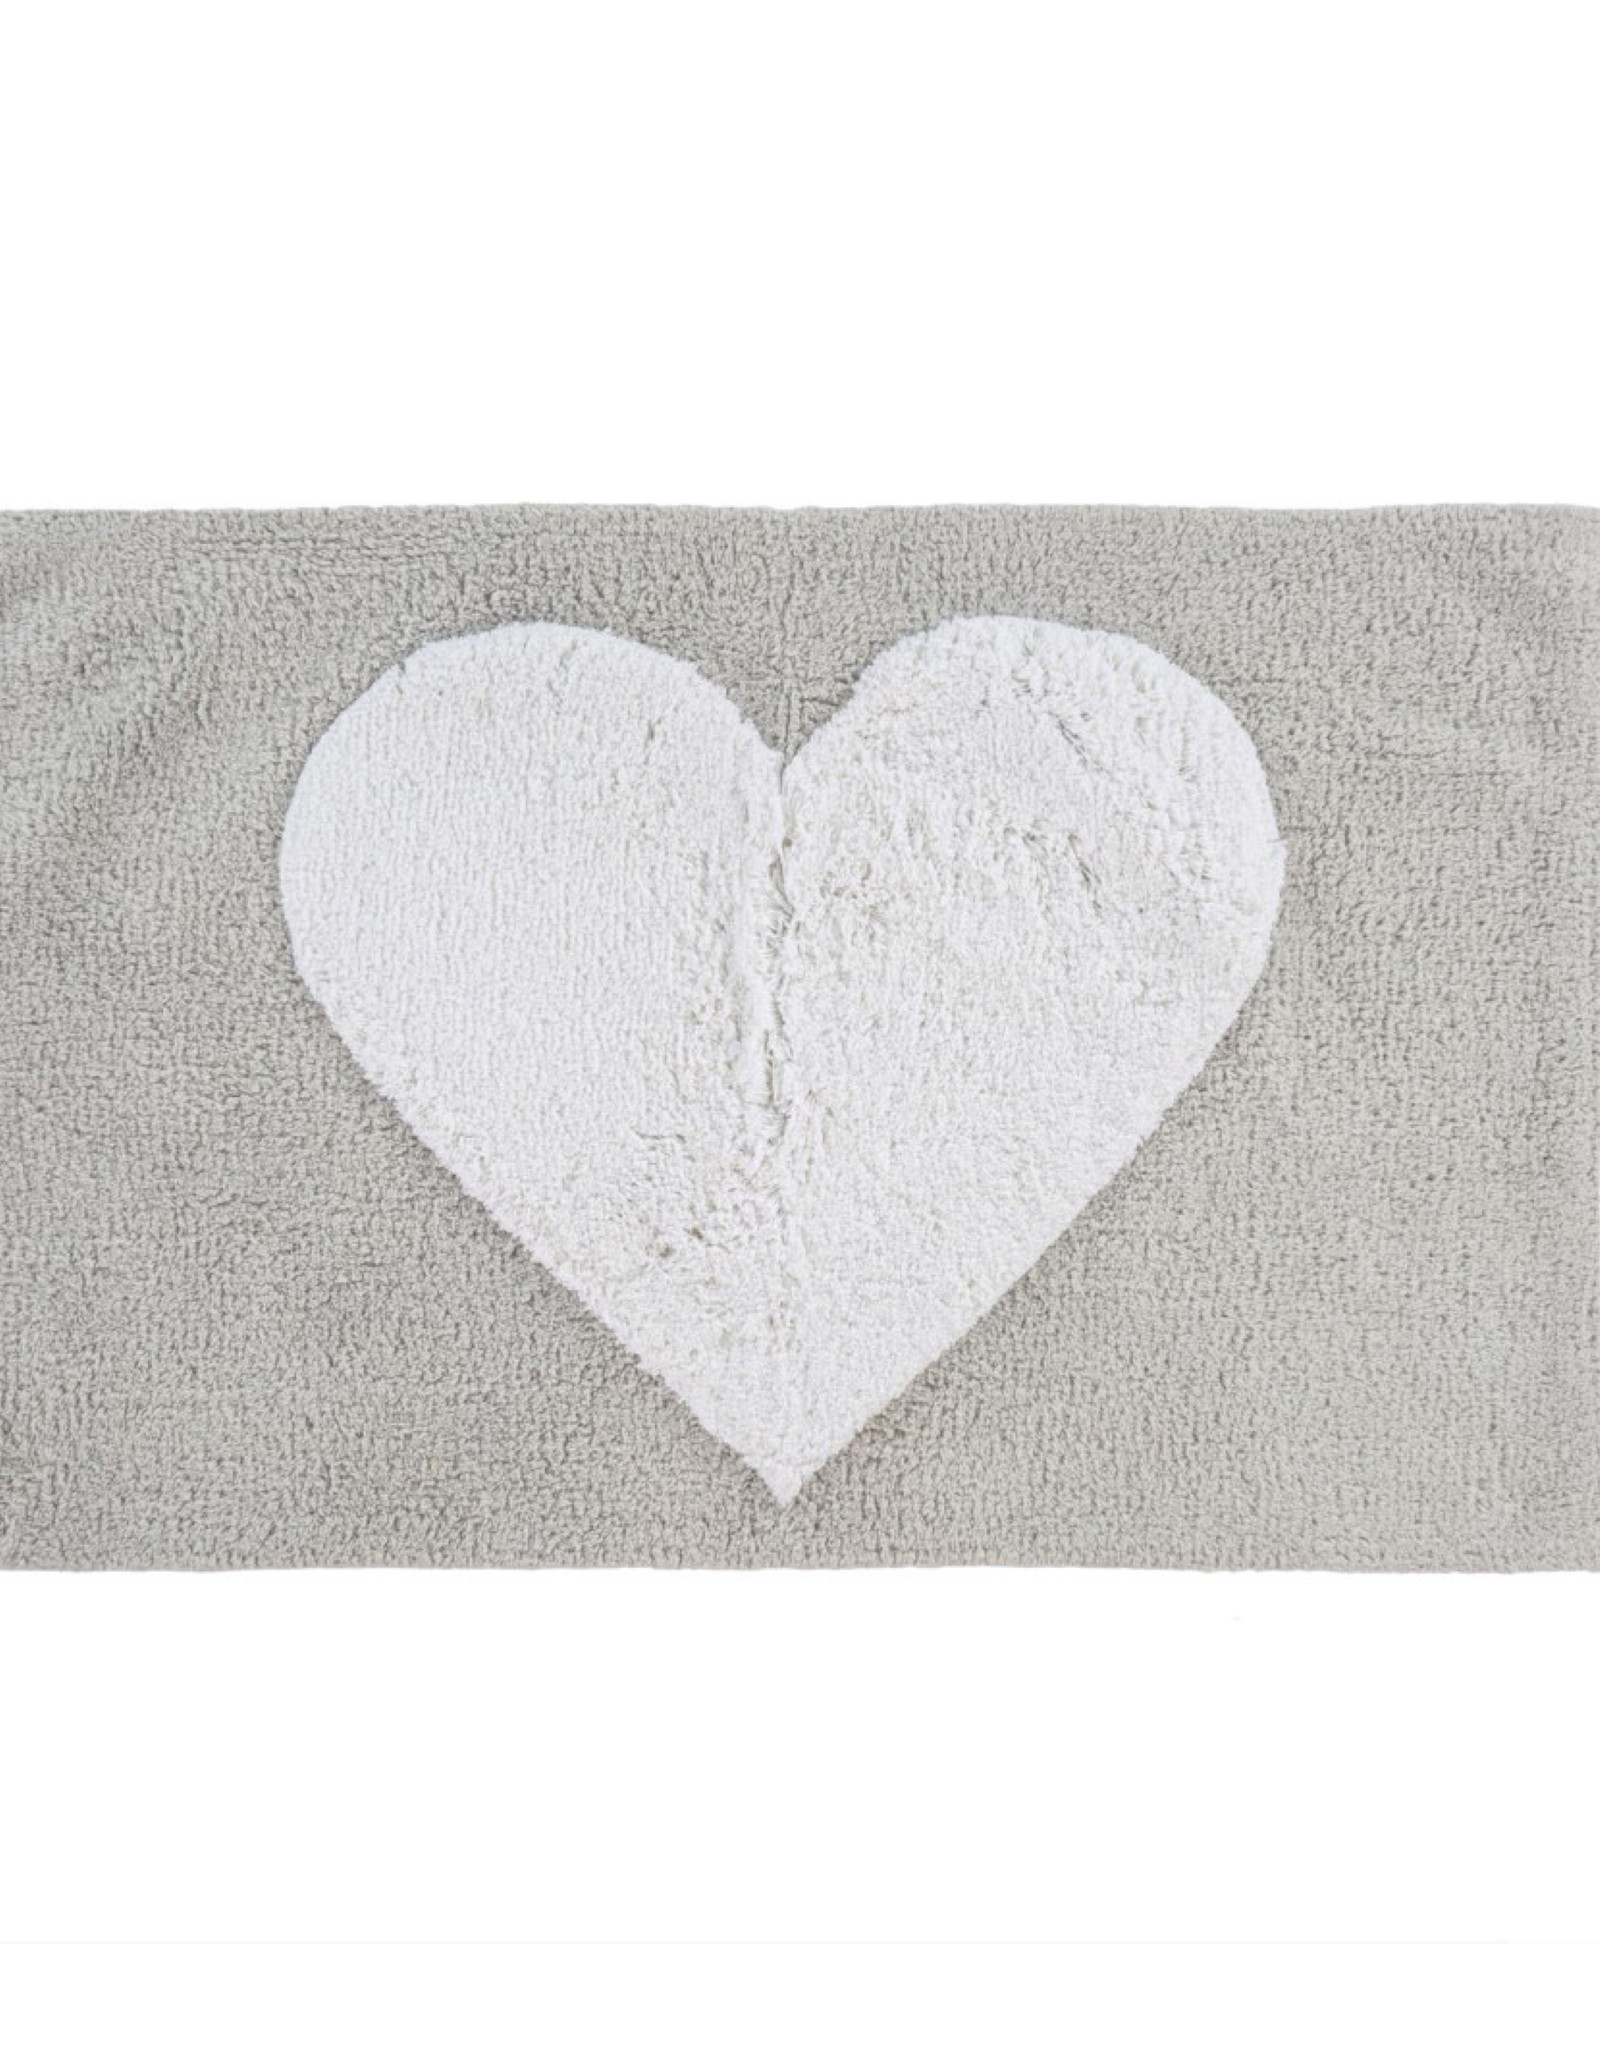 Indaba Bath Mat Indaba Heart Grey/White 1-4092